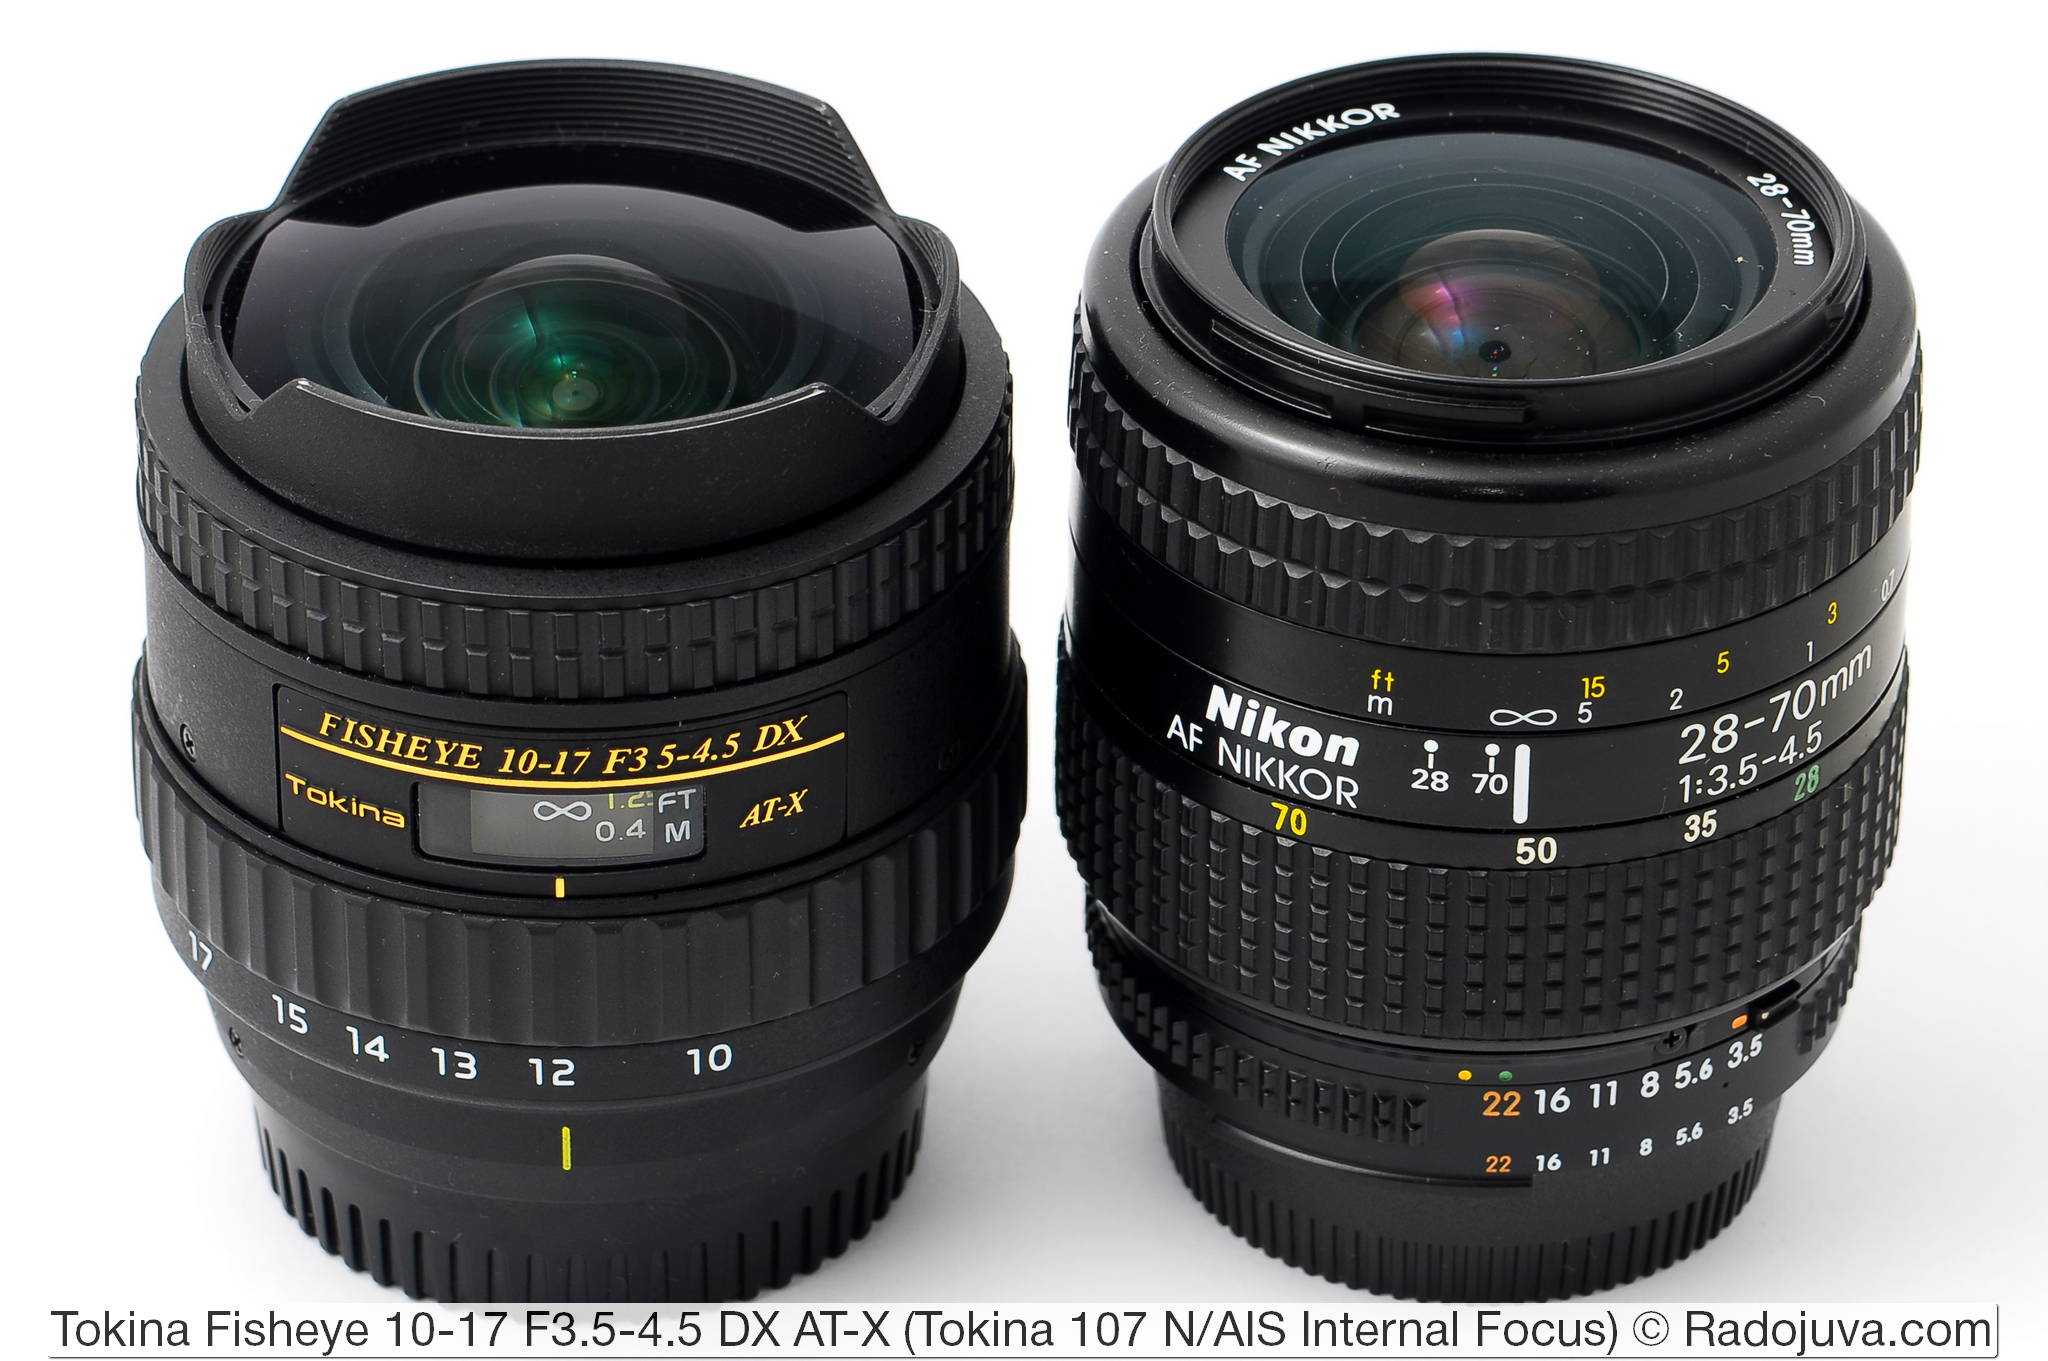 Dimensiones Tokina 107 Fisheye 10-17mm F3.5-4.5 DX AT-X Internal Focus y Nikon AF Nikkor 28-70mm 1:3.5-4.5 (MKI)